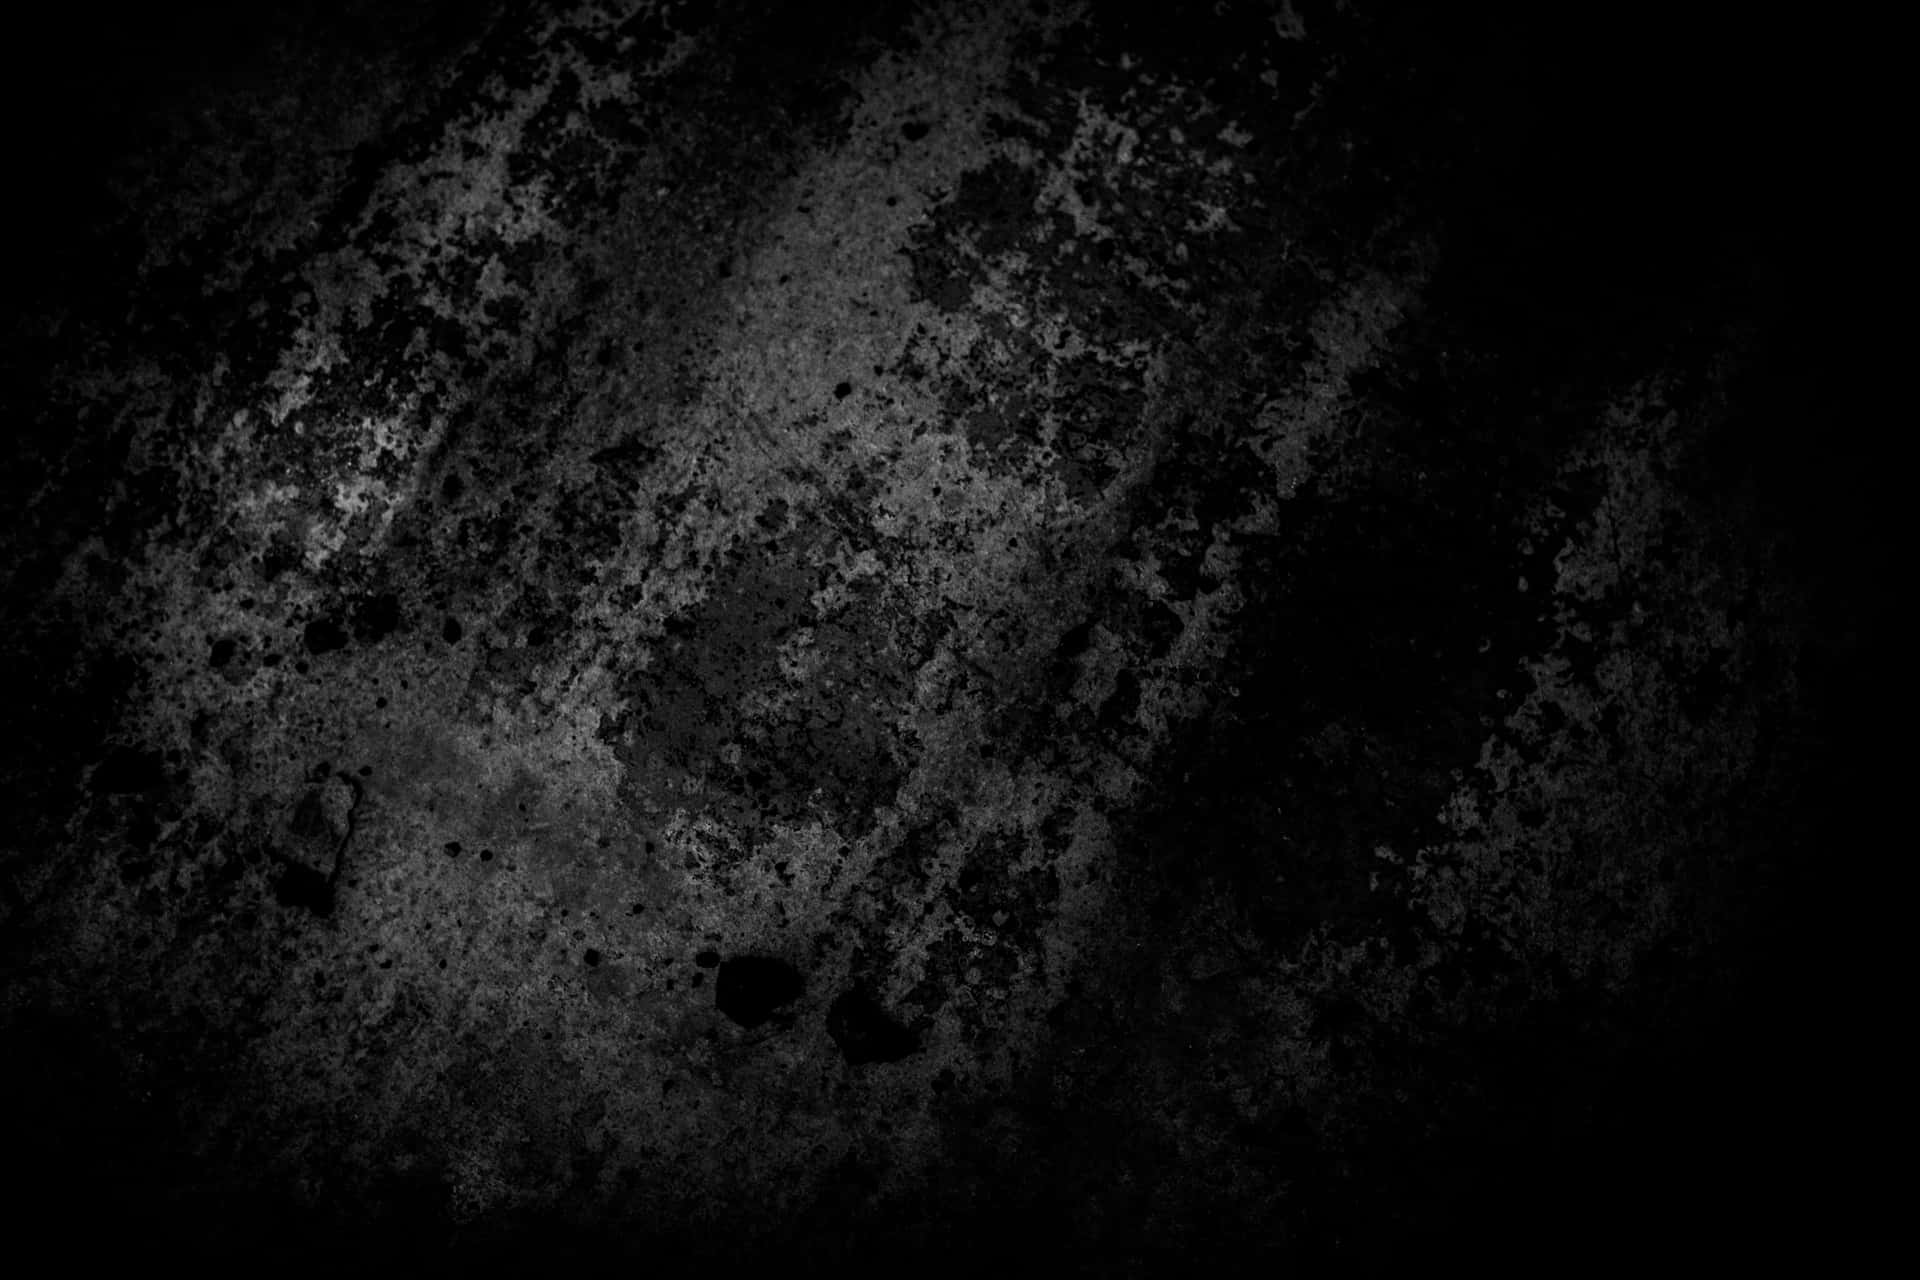 Dark Grunge Aesthetic of an Abandoned Building Wallpaper